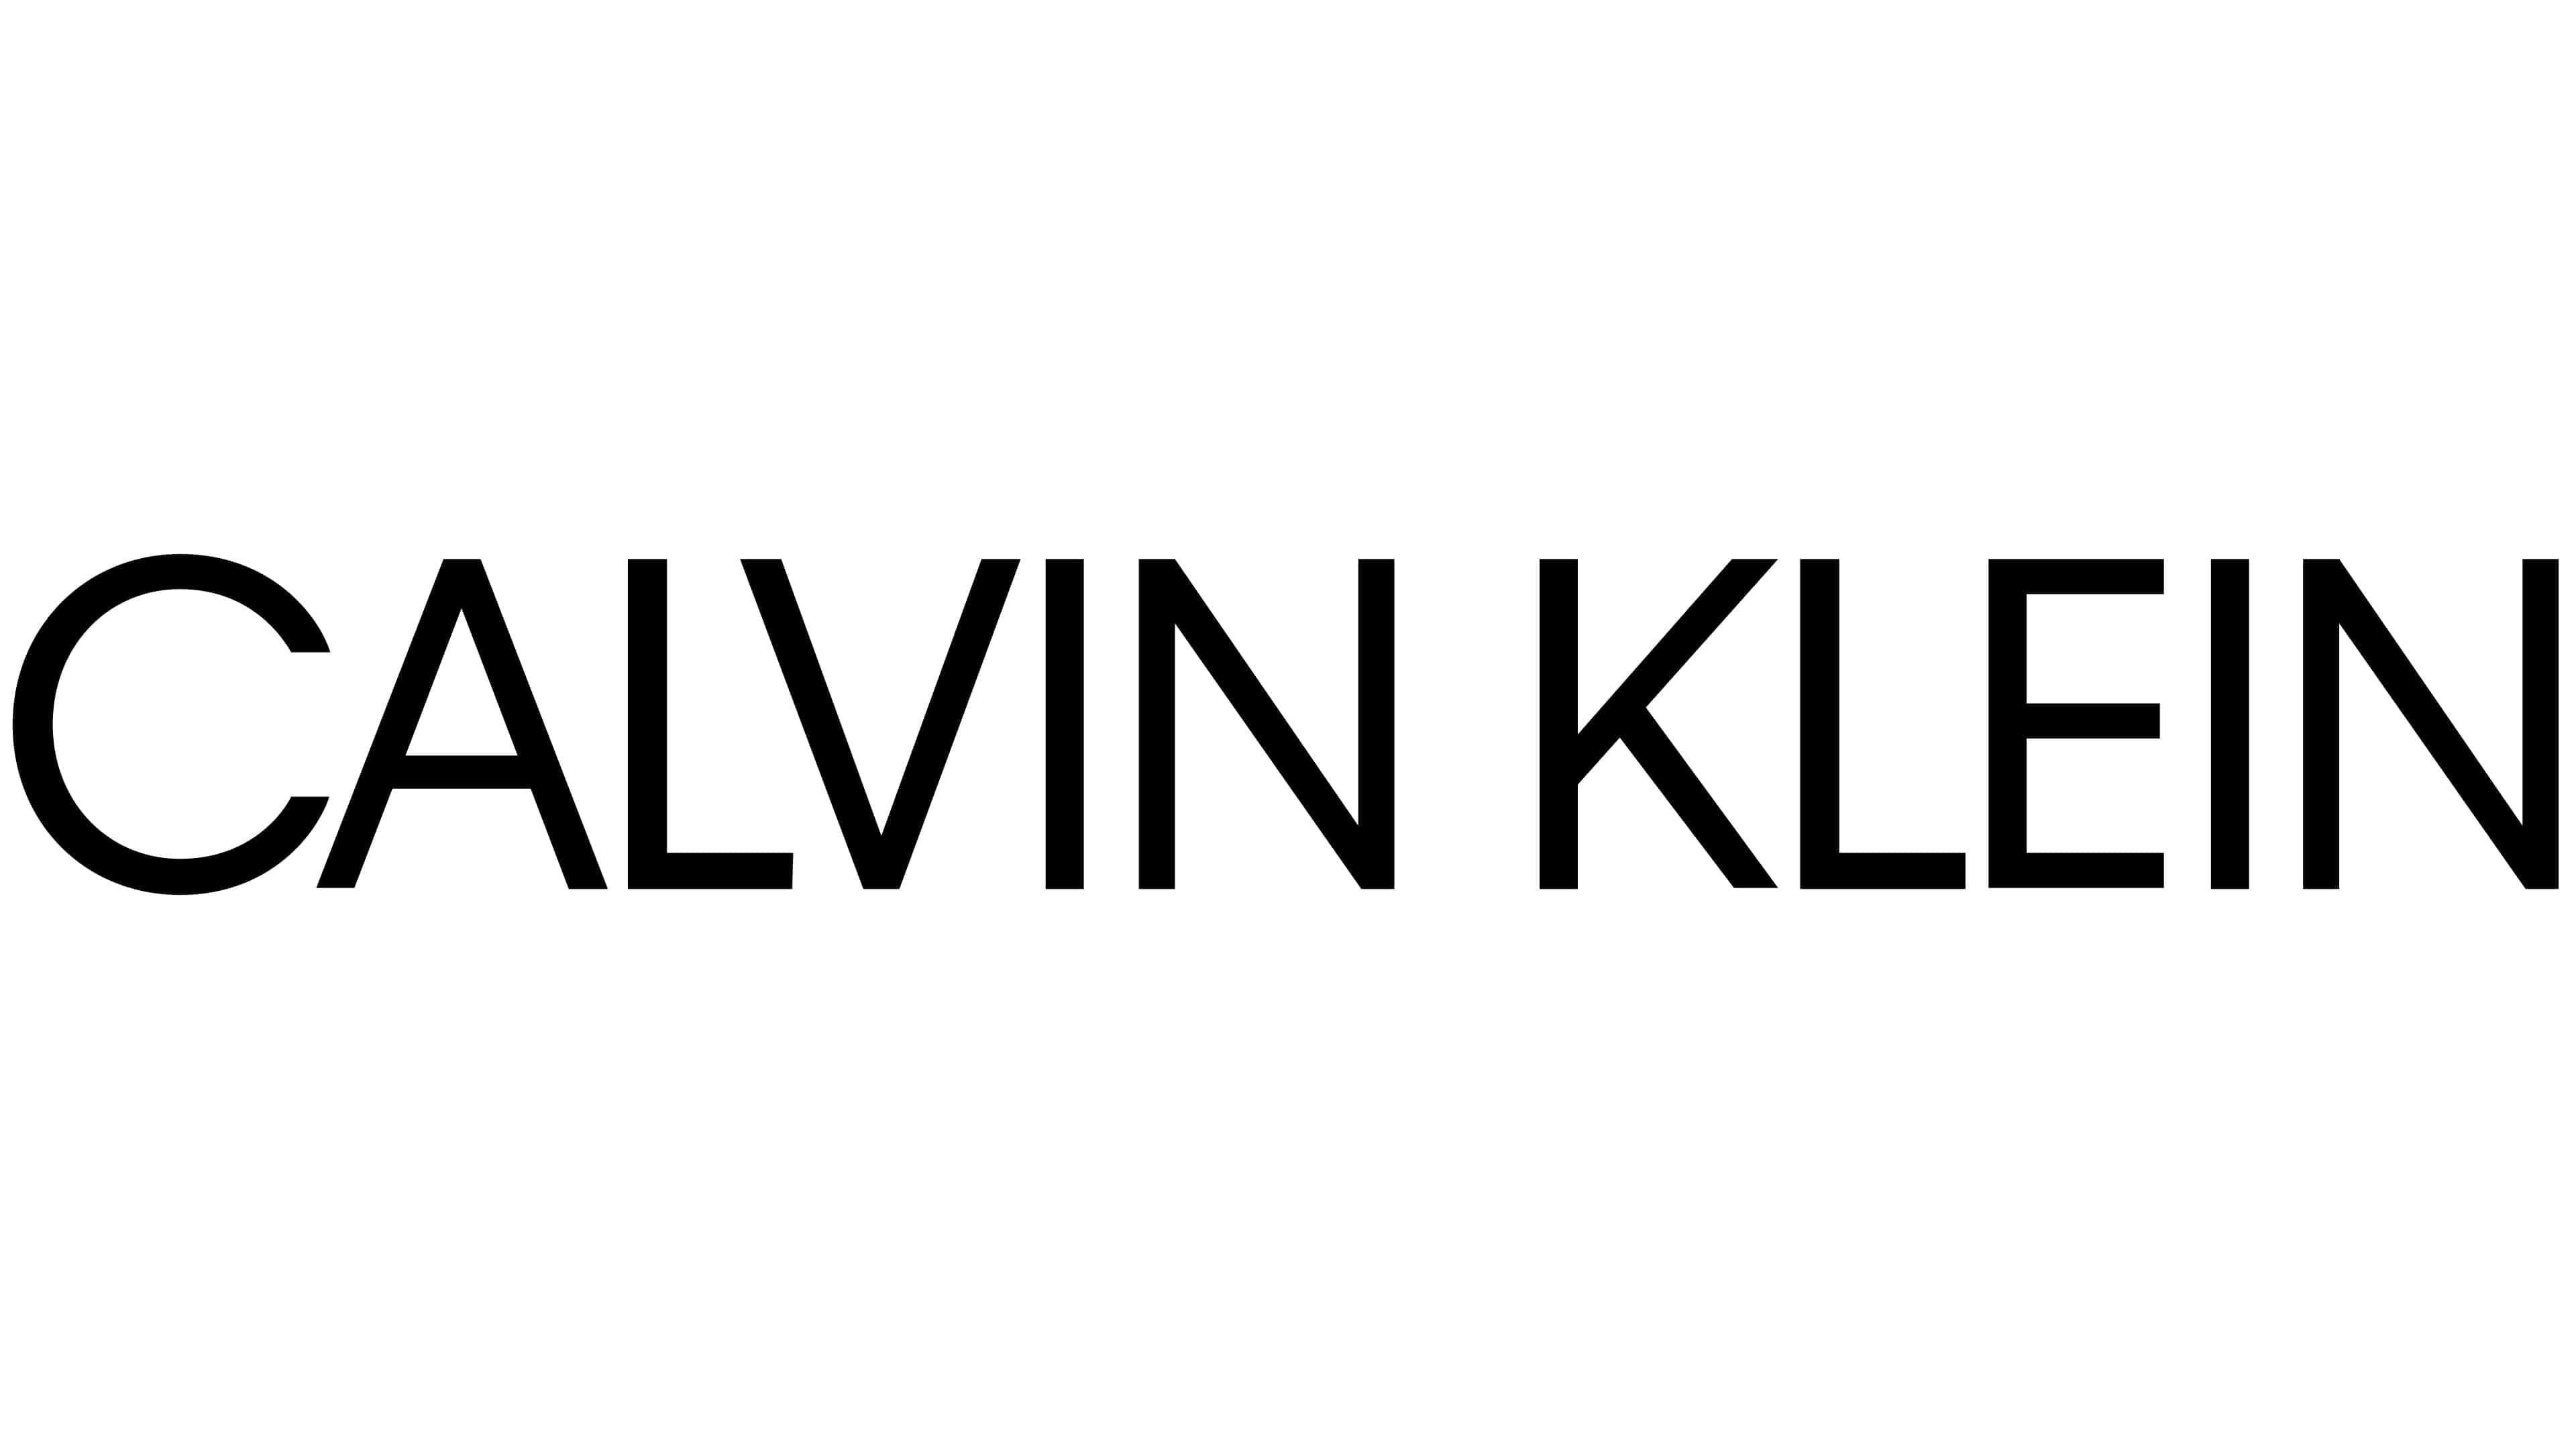 Calvin Klein Brand Logo Deals, 49% OFF | www.ecotourisme.info